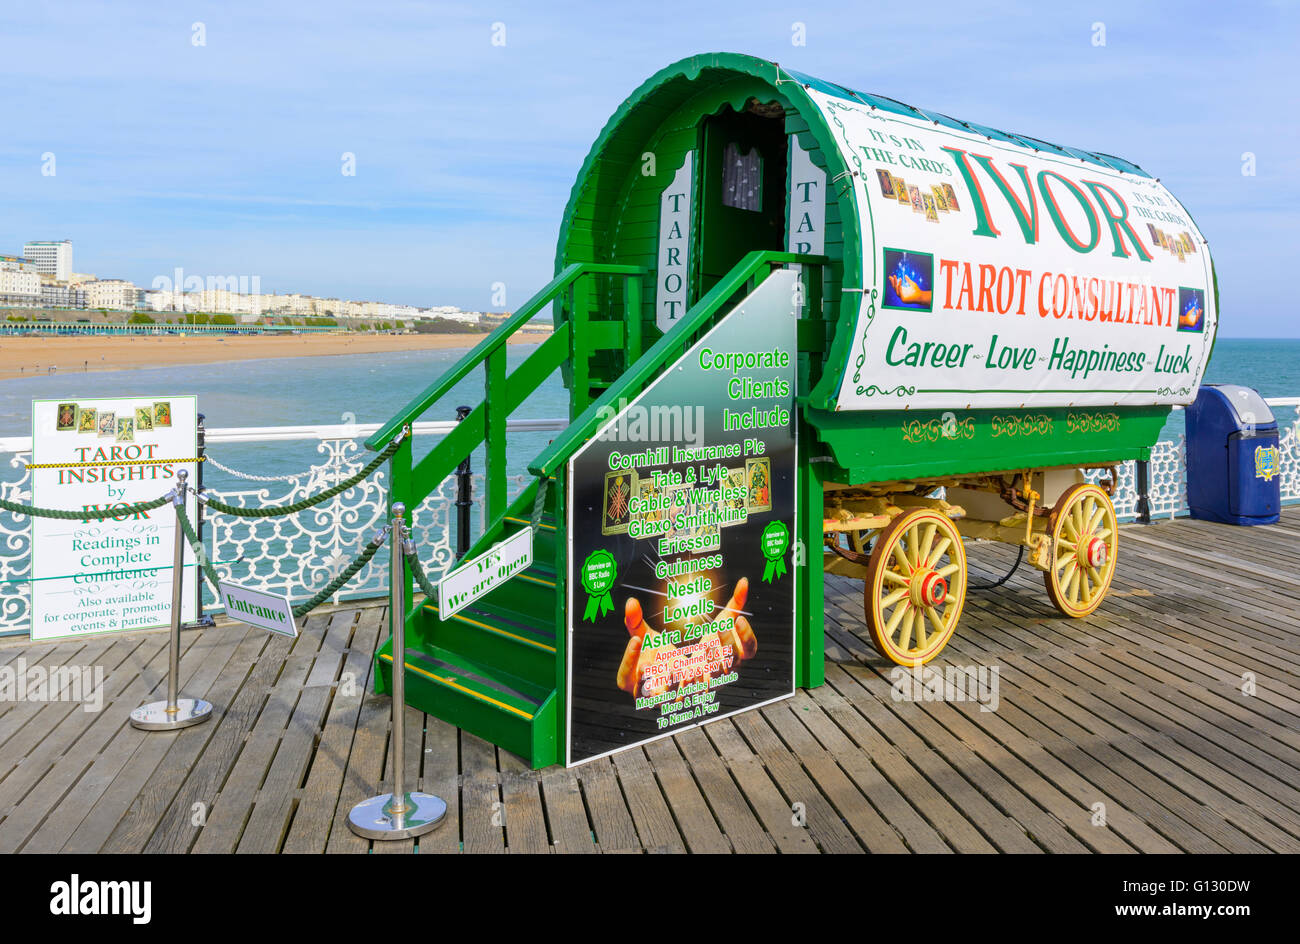 Ivor Fireman Tarot Consultant caravan on Brighton Pier, Brighton, East Sussex, England, UK. Stock Photo